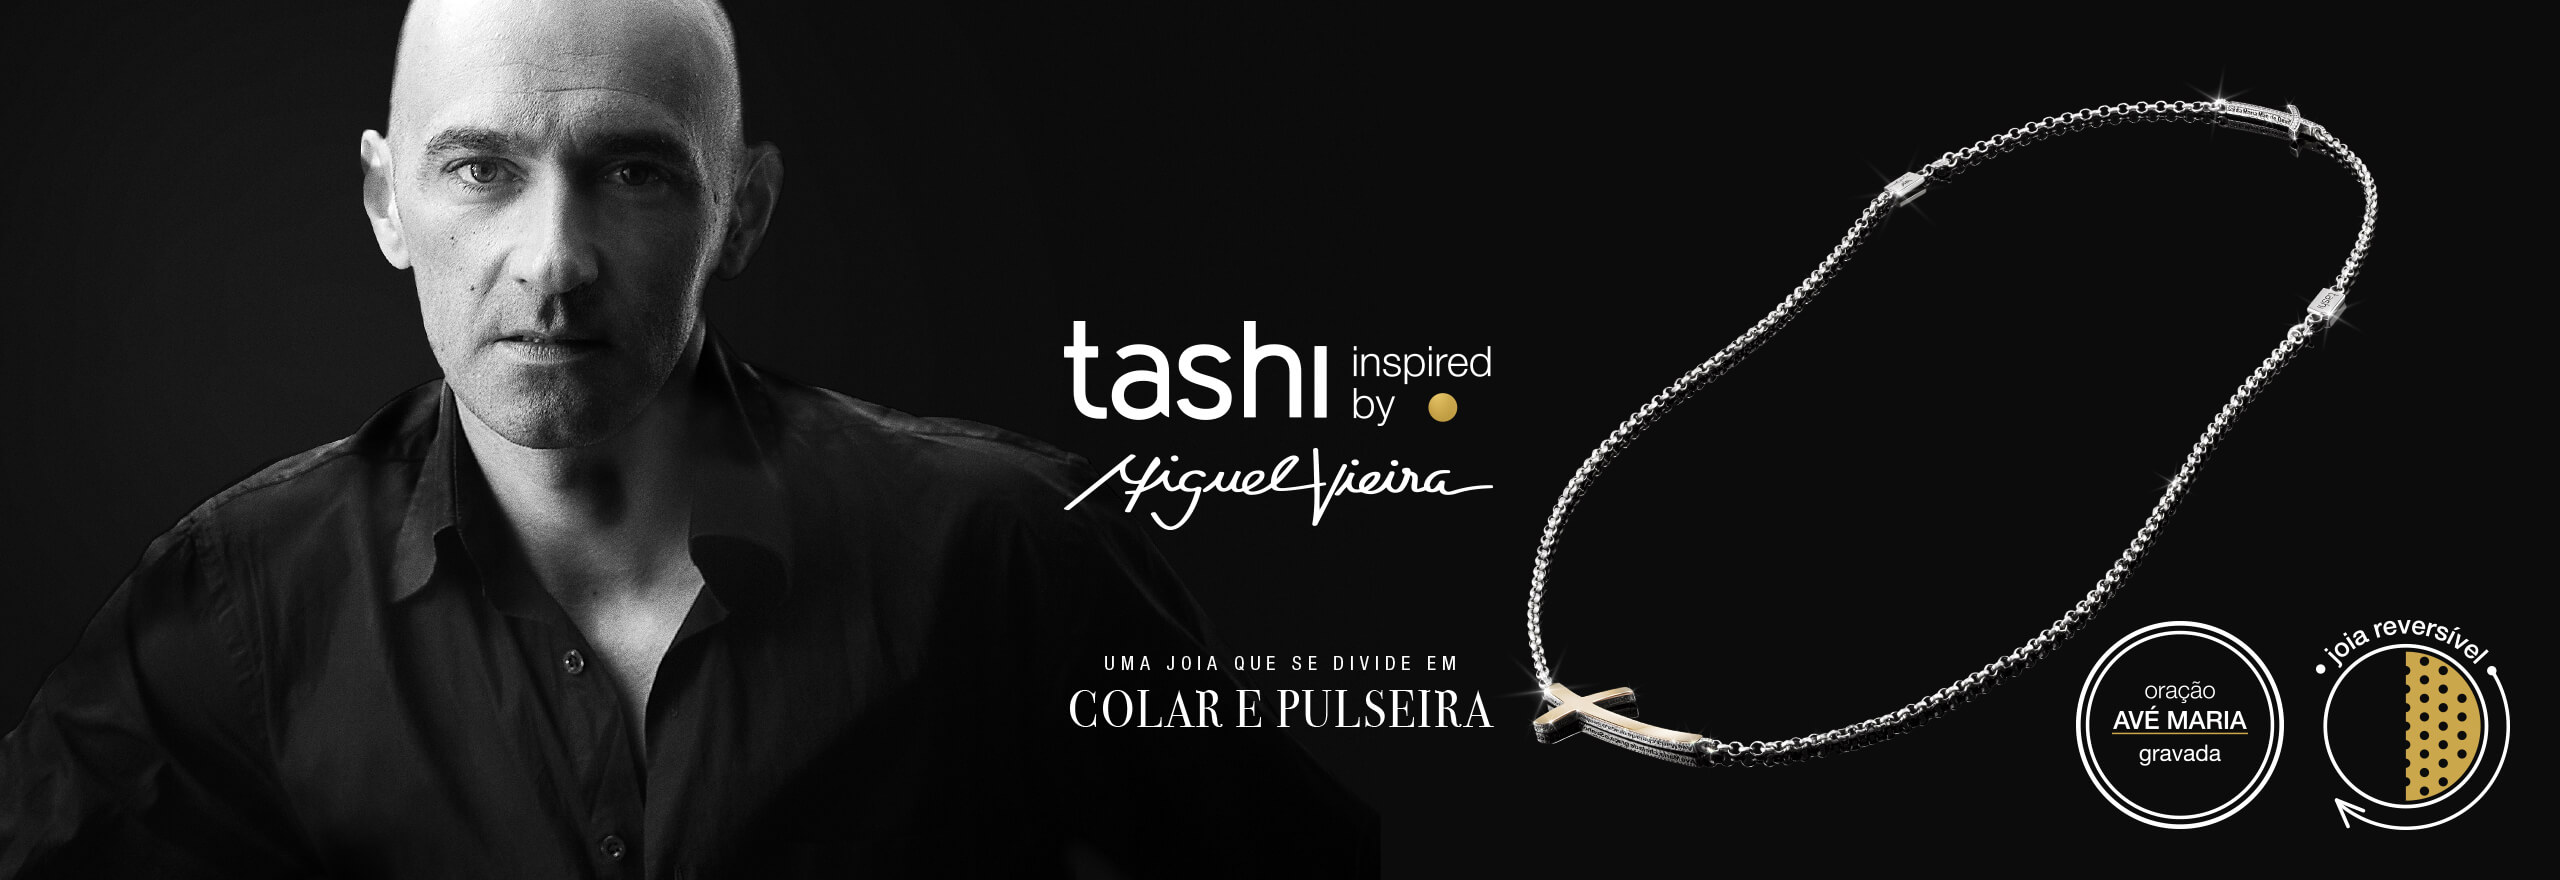 Miguel Vieira desenha novas joias para a TASHI